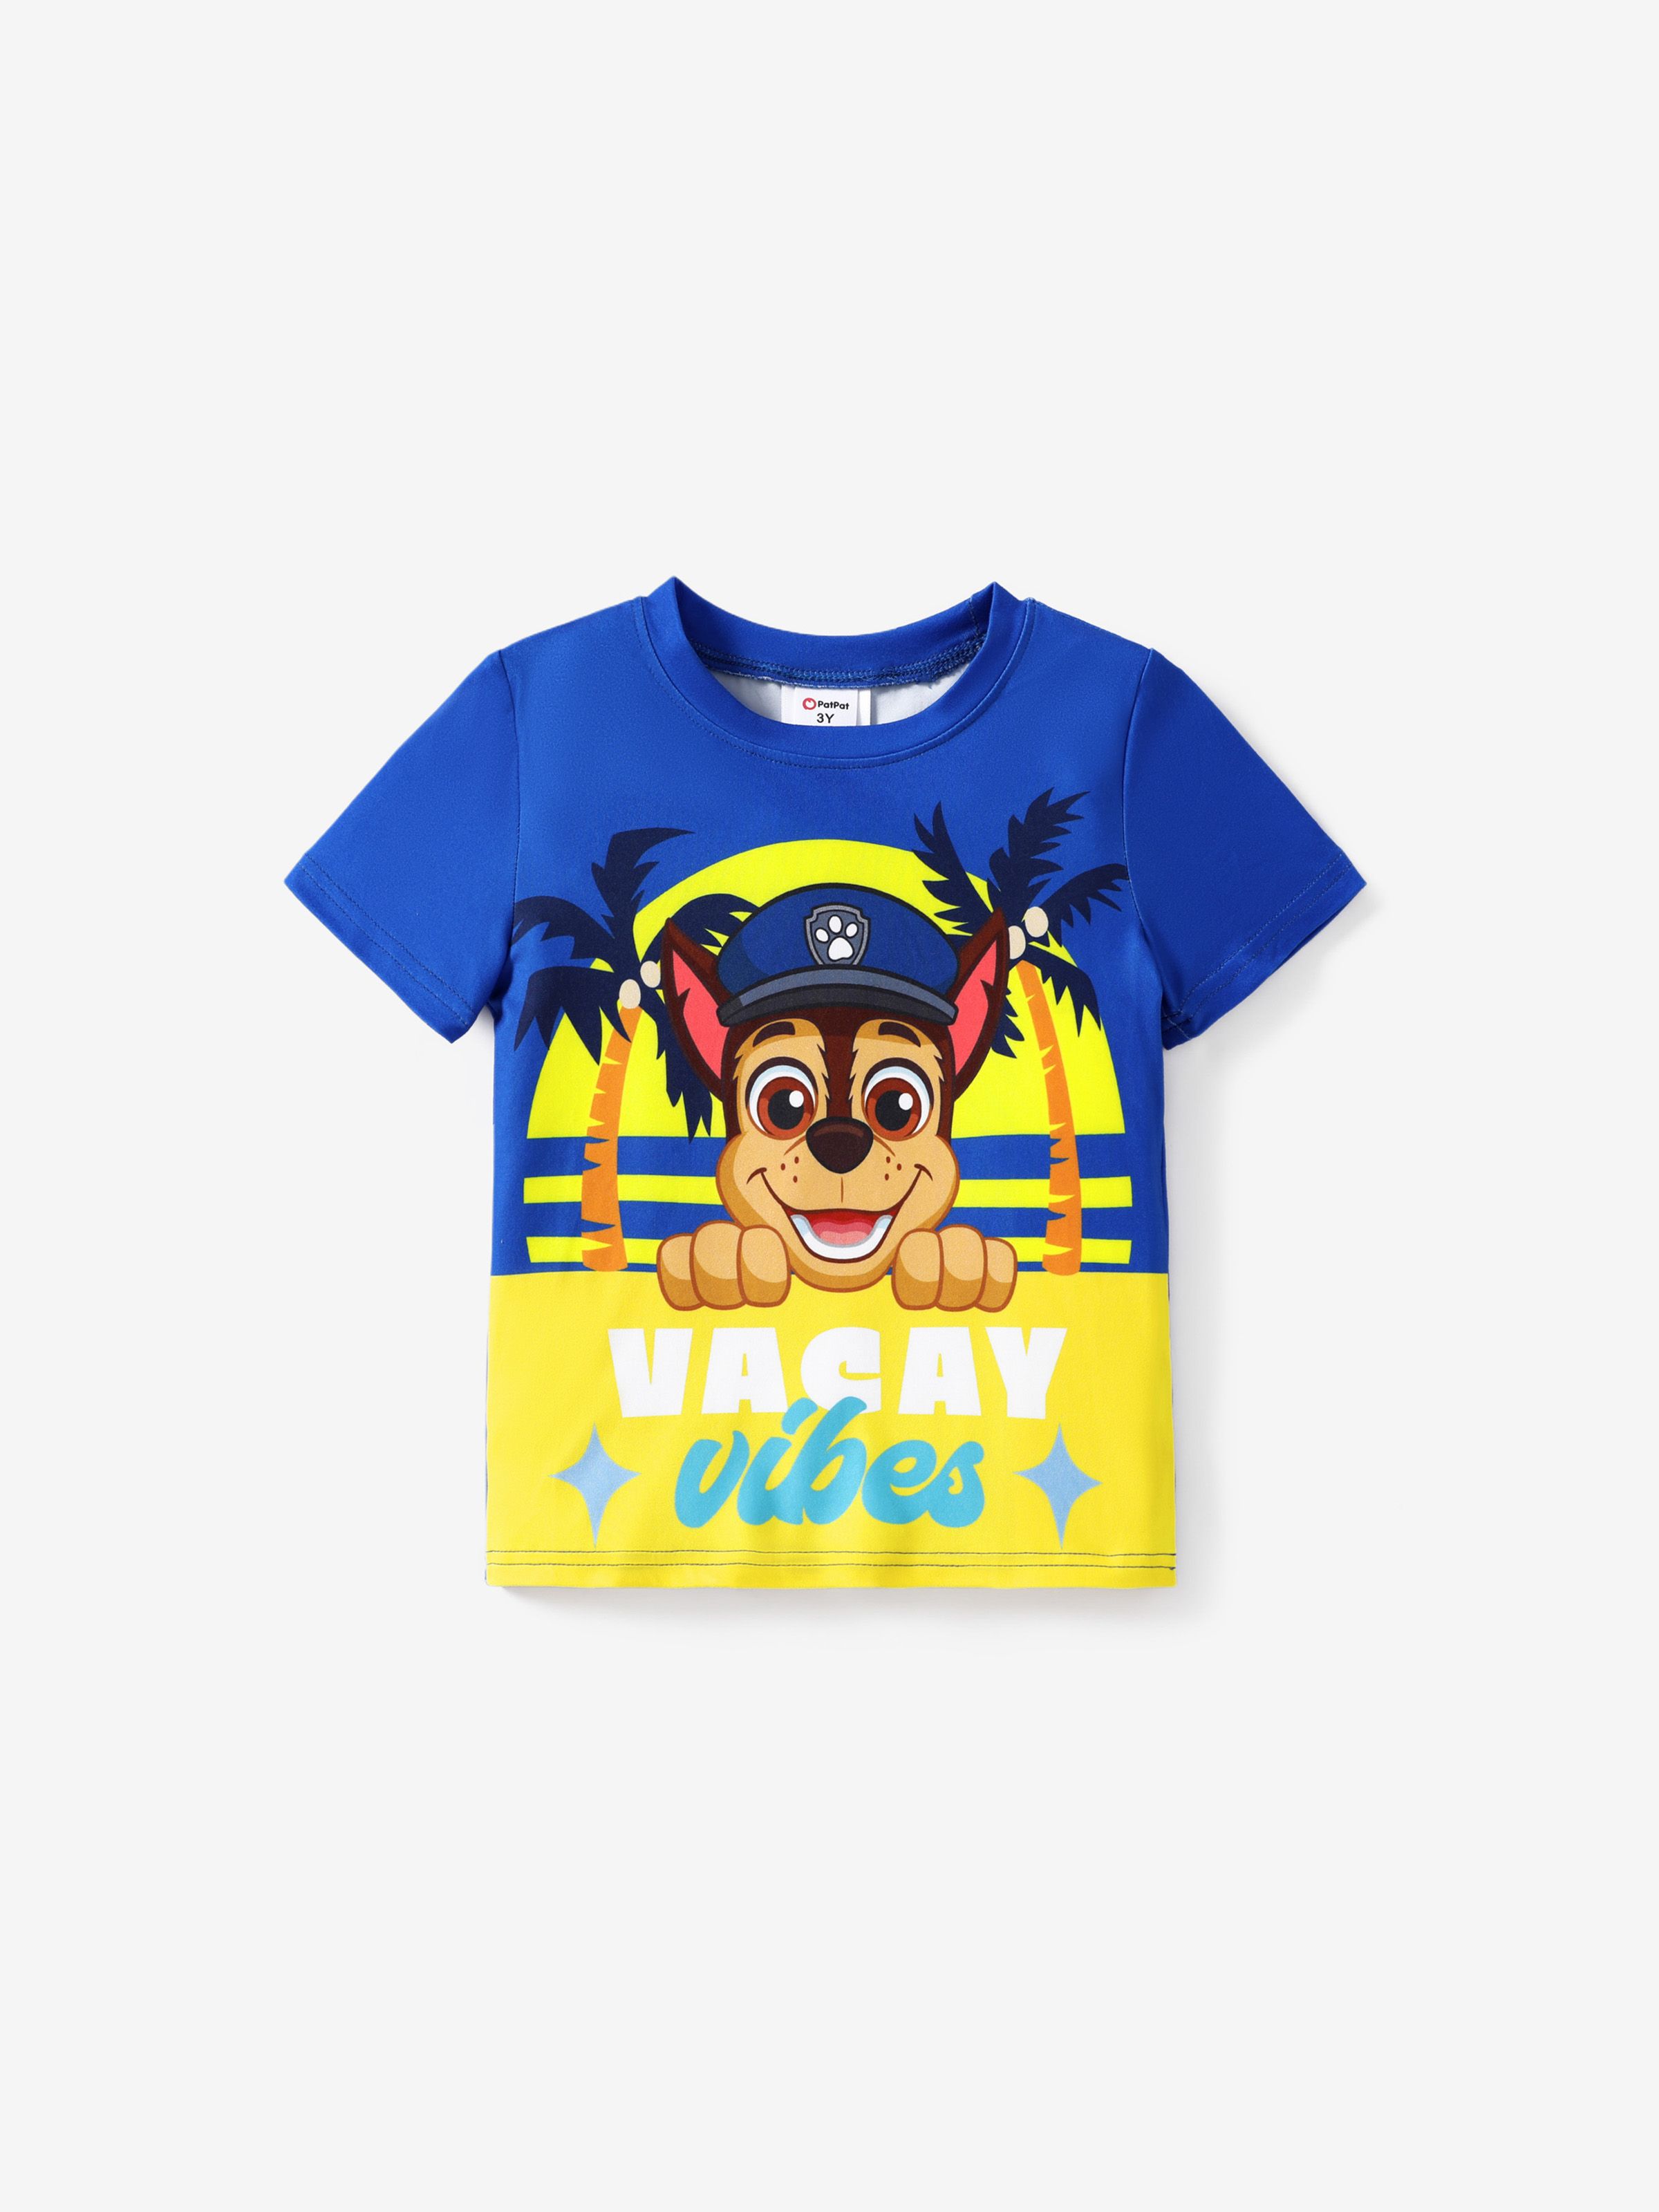 

Paw Patrol Toddler Boys/Girls 1pc Summer Hawaii Style Character Print T-shirt